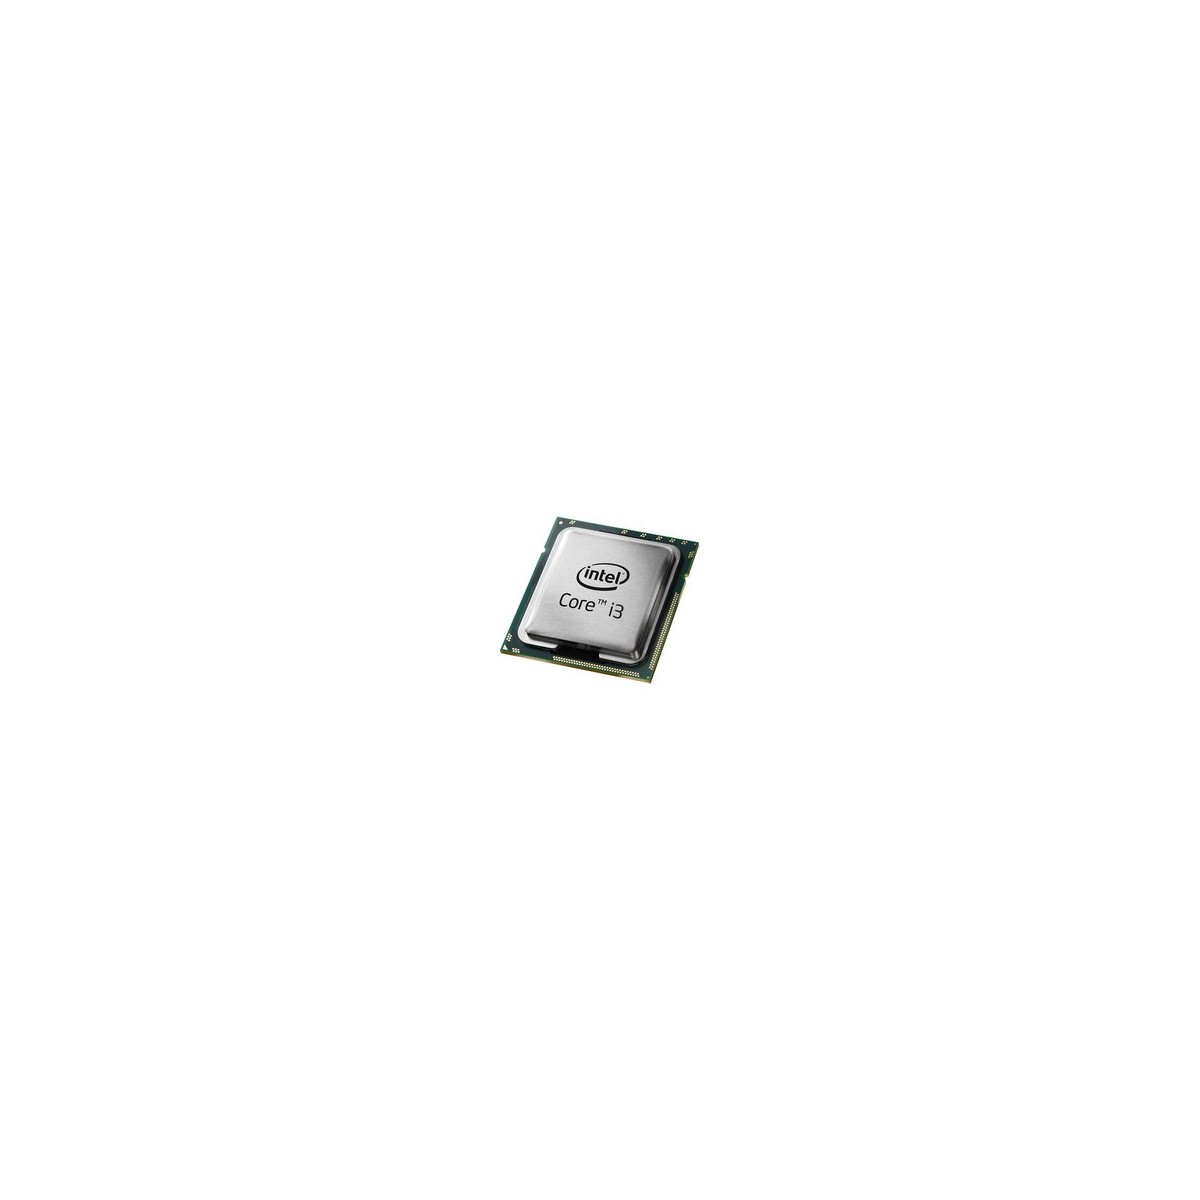 Intel Core i3-7100 Core i3 3.4 GHz - Skt 1151 Kaby Lake